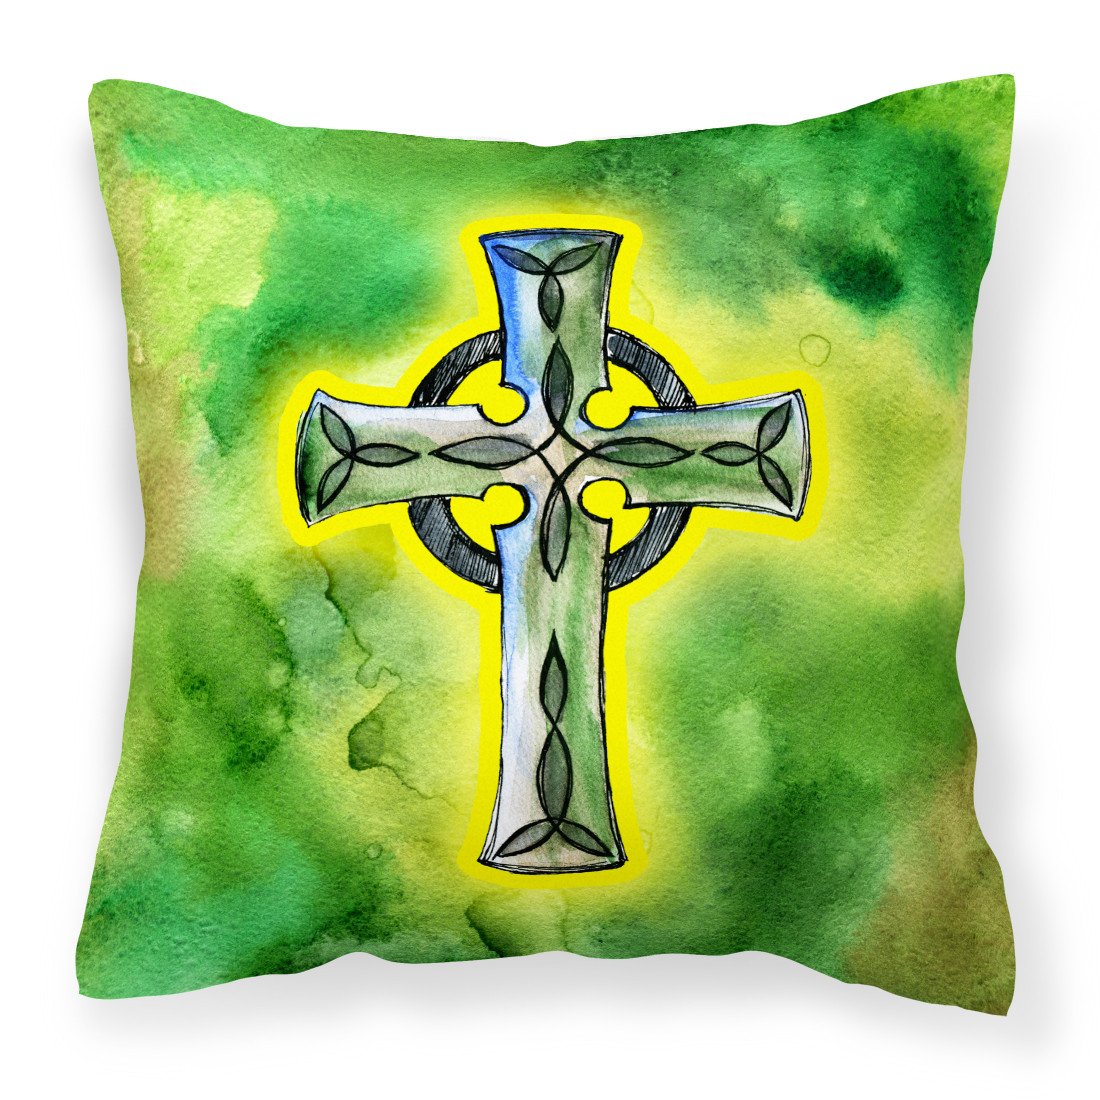 Irish Celtic Cross Fabric Decorative Pillow BB5764PW1818 by Caroline's Treasures